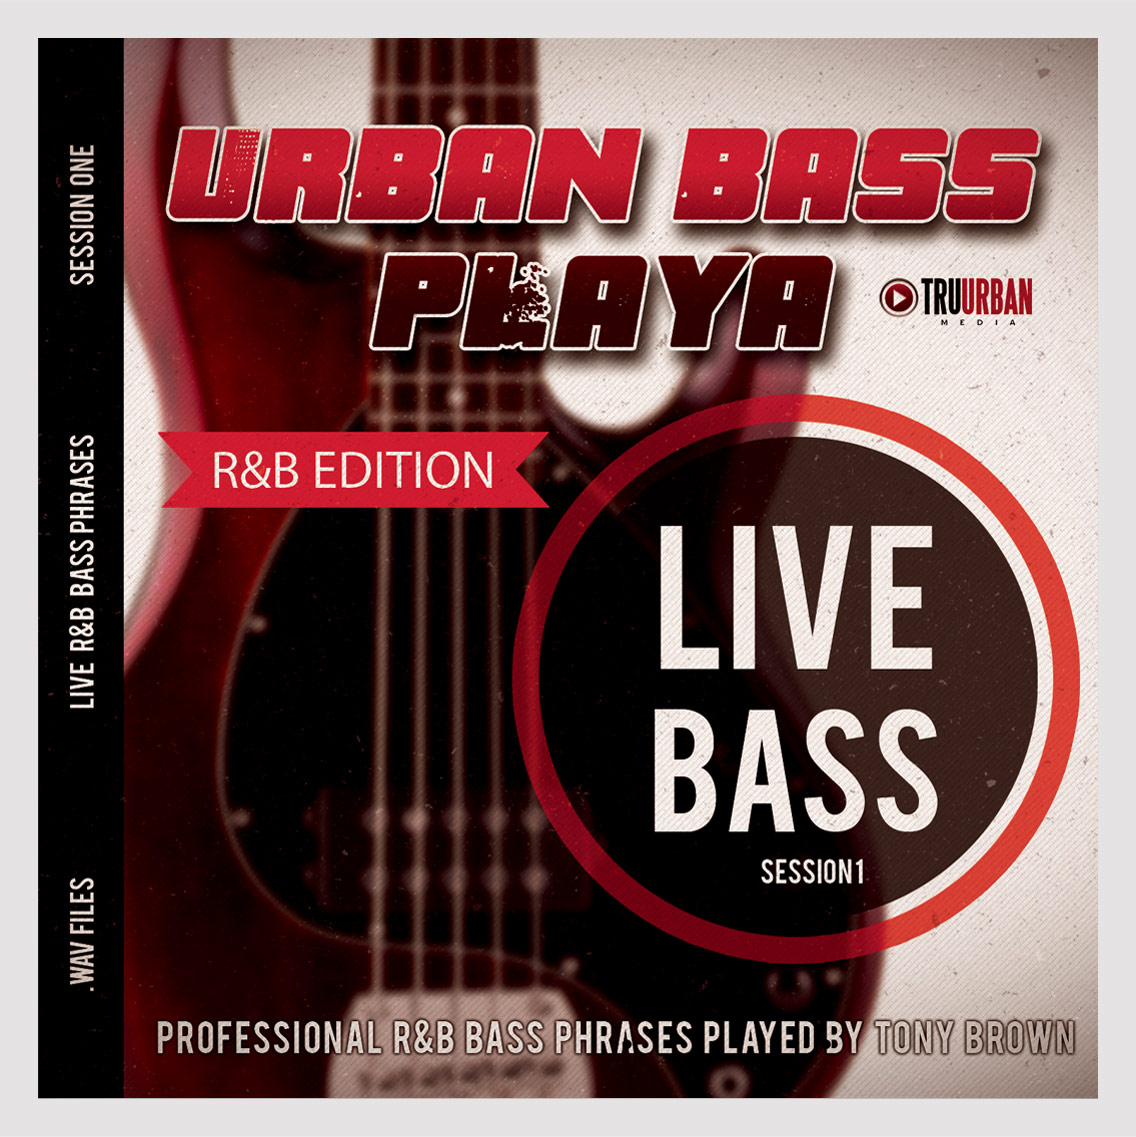 Urban Bass Playa: Live Bass Phrases by Tru-Urban - Bass Guitar